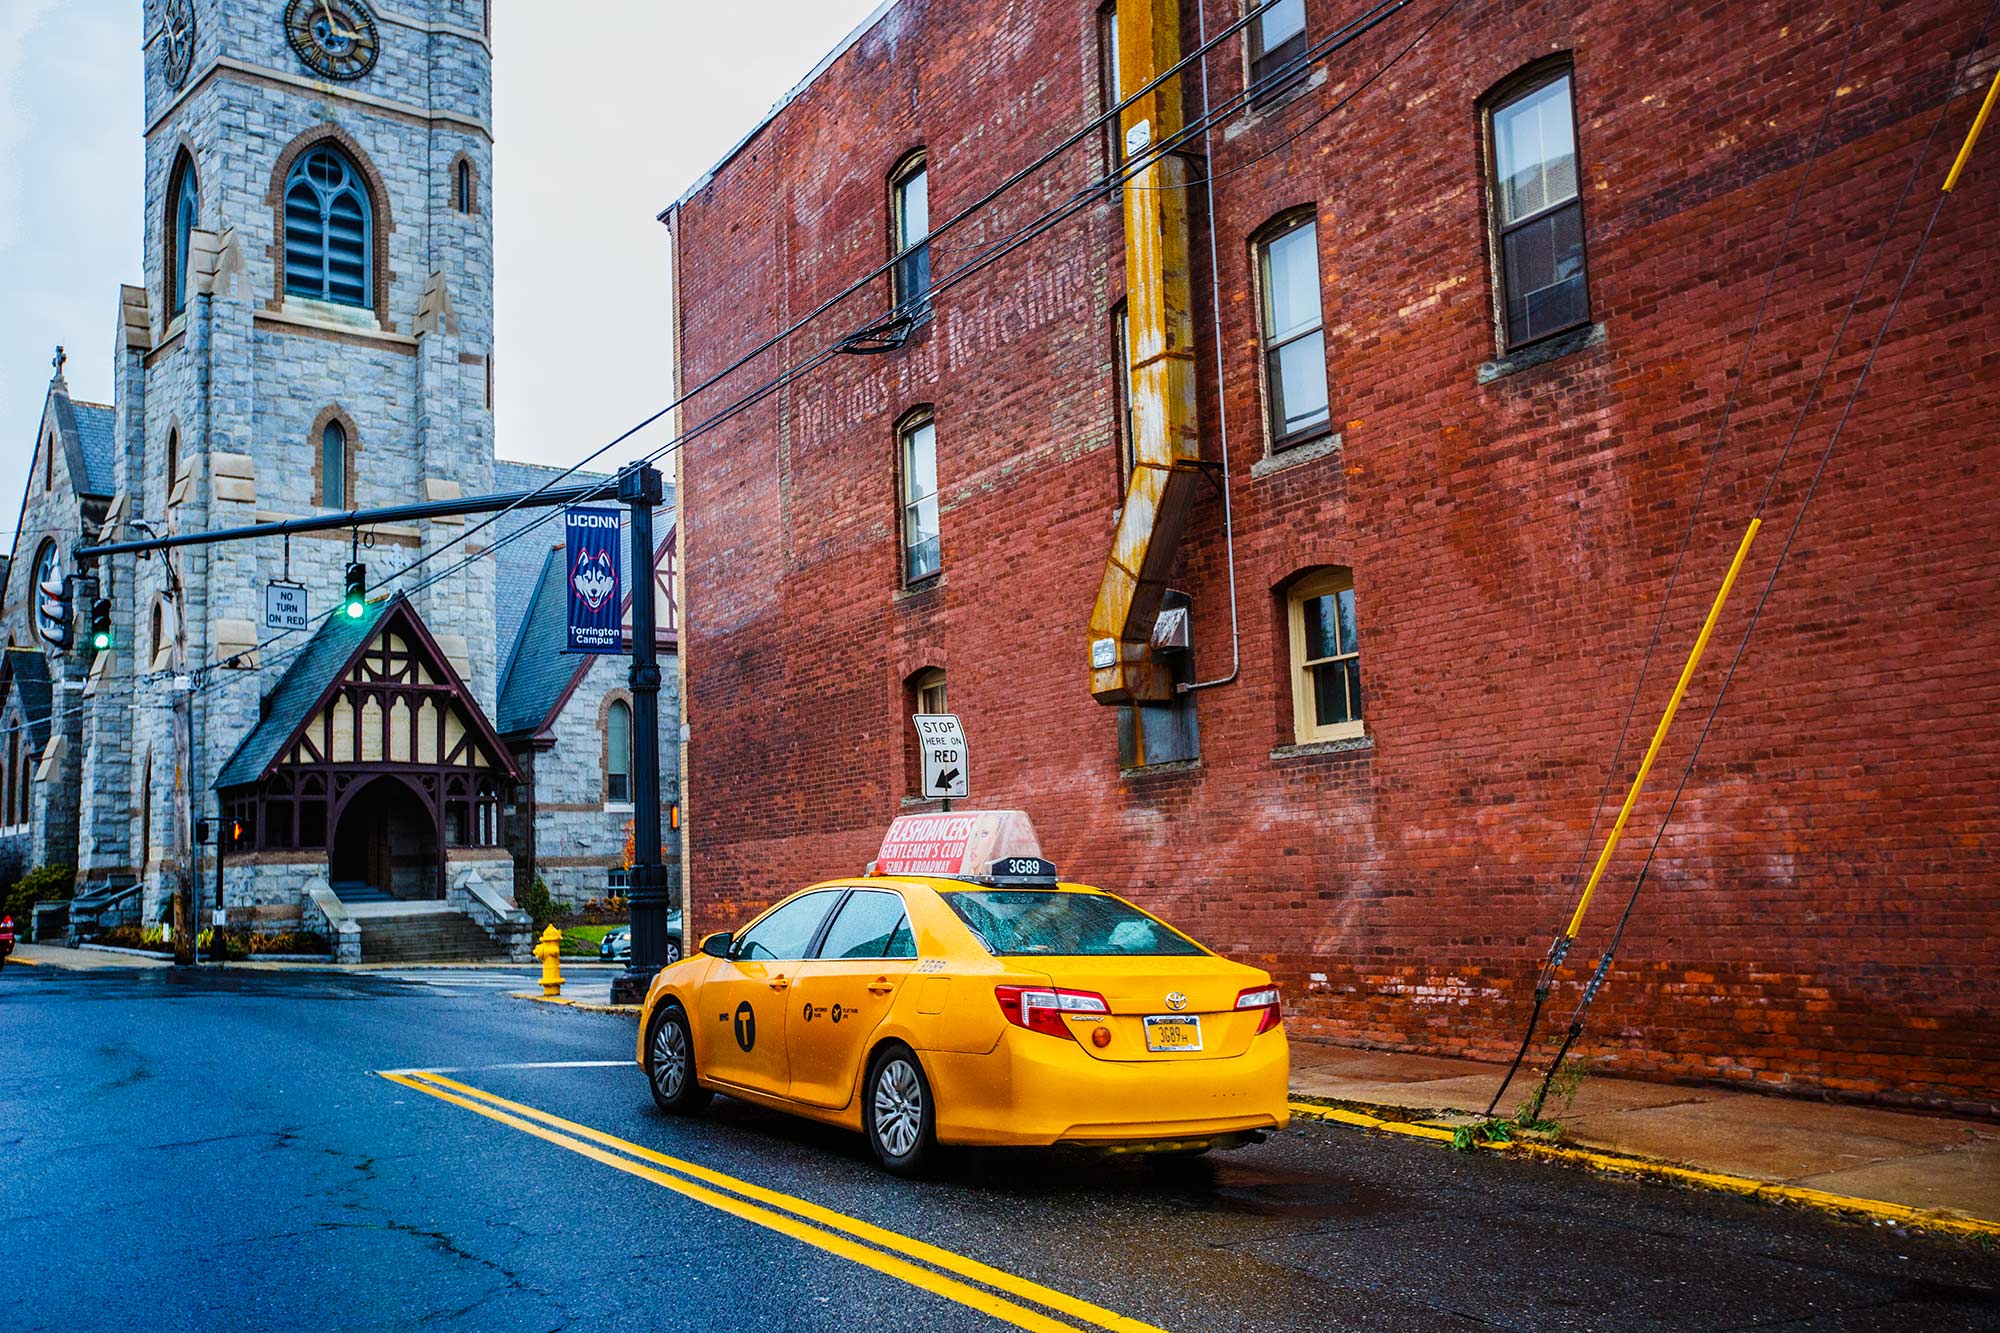 NYC Yellow Cab in Torrington, CT - 11/28